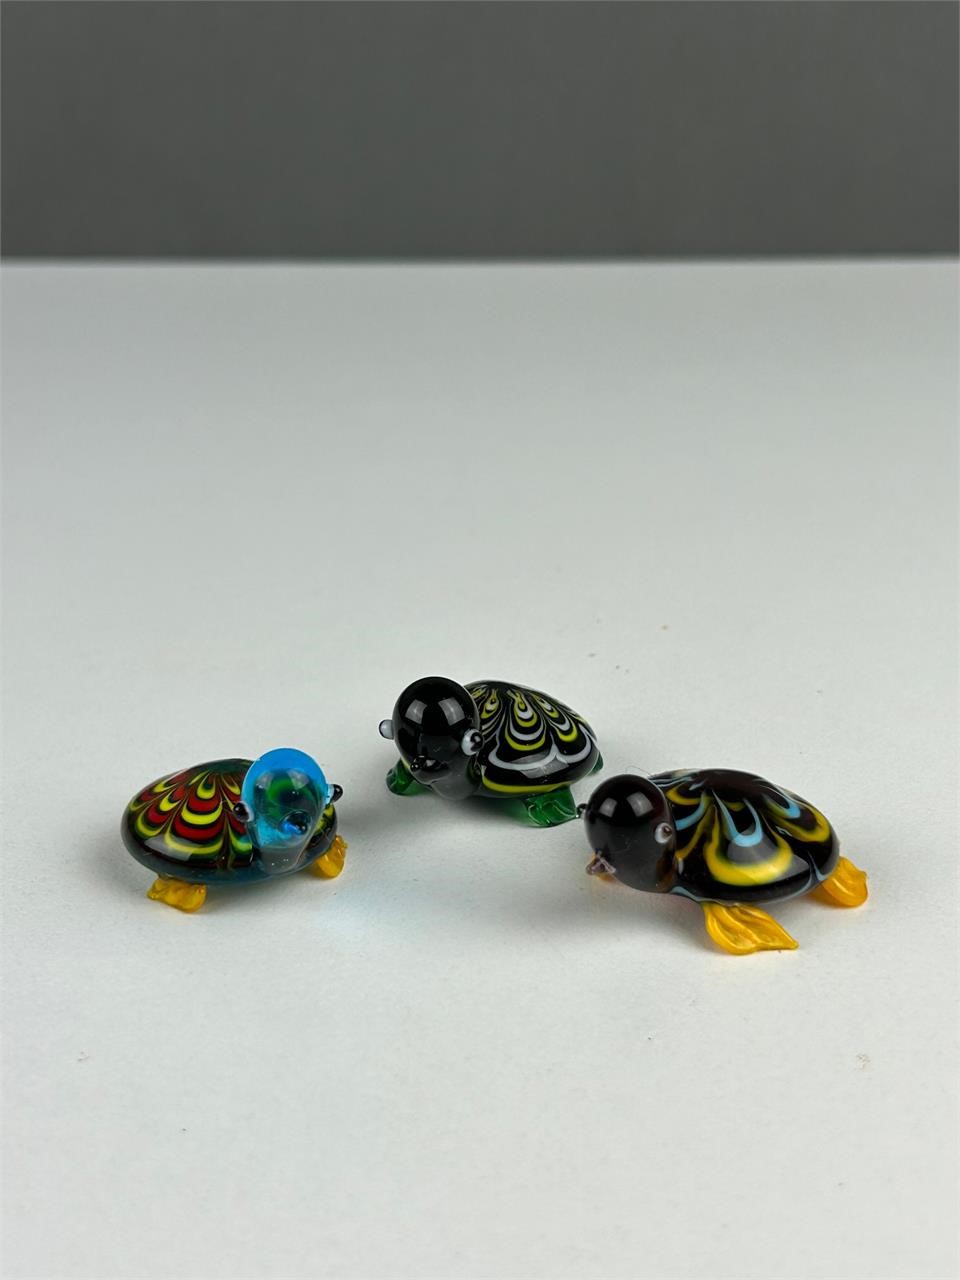 Small glass art Turtles